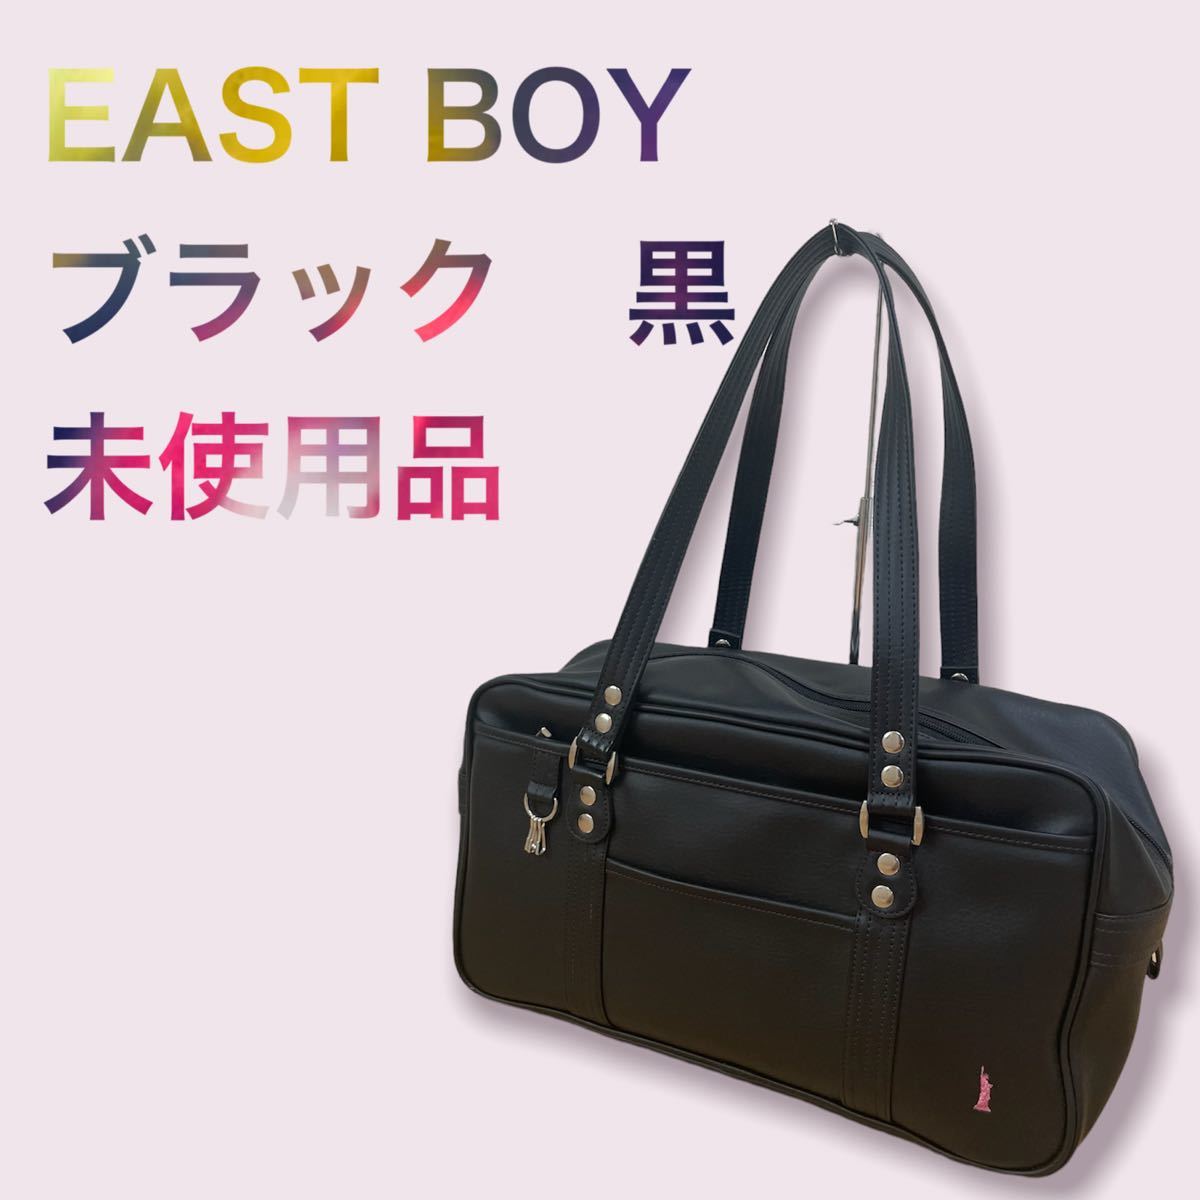 east boy スクールバッグ 合皮 黒 www.showme.org